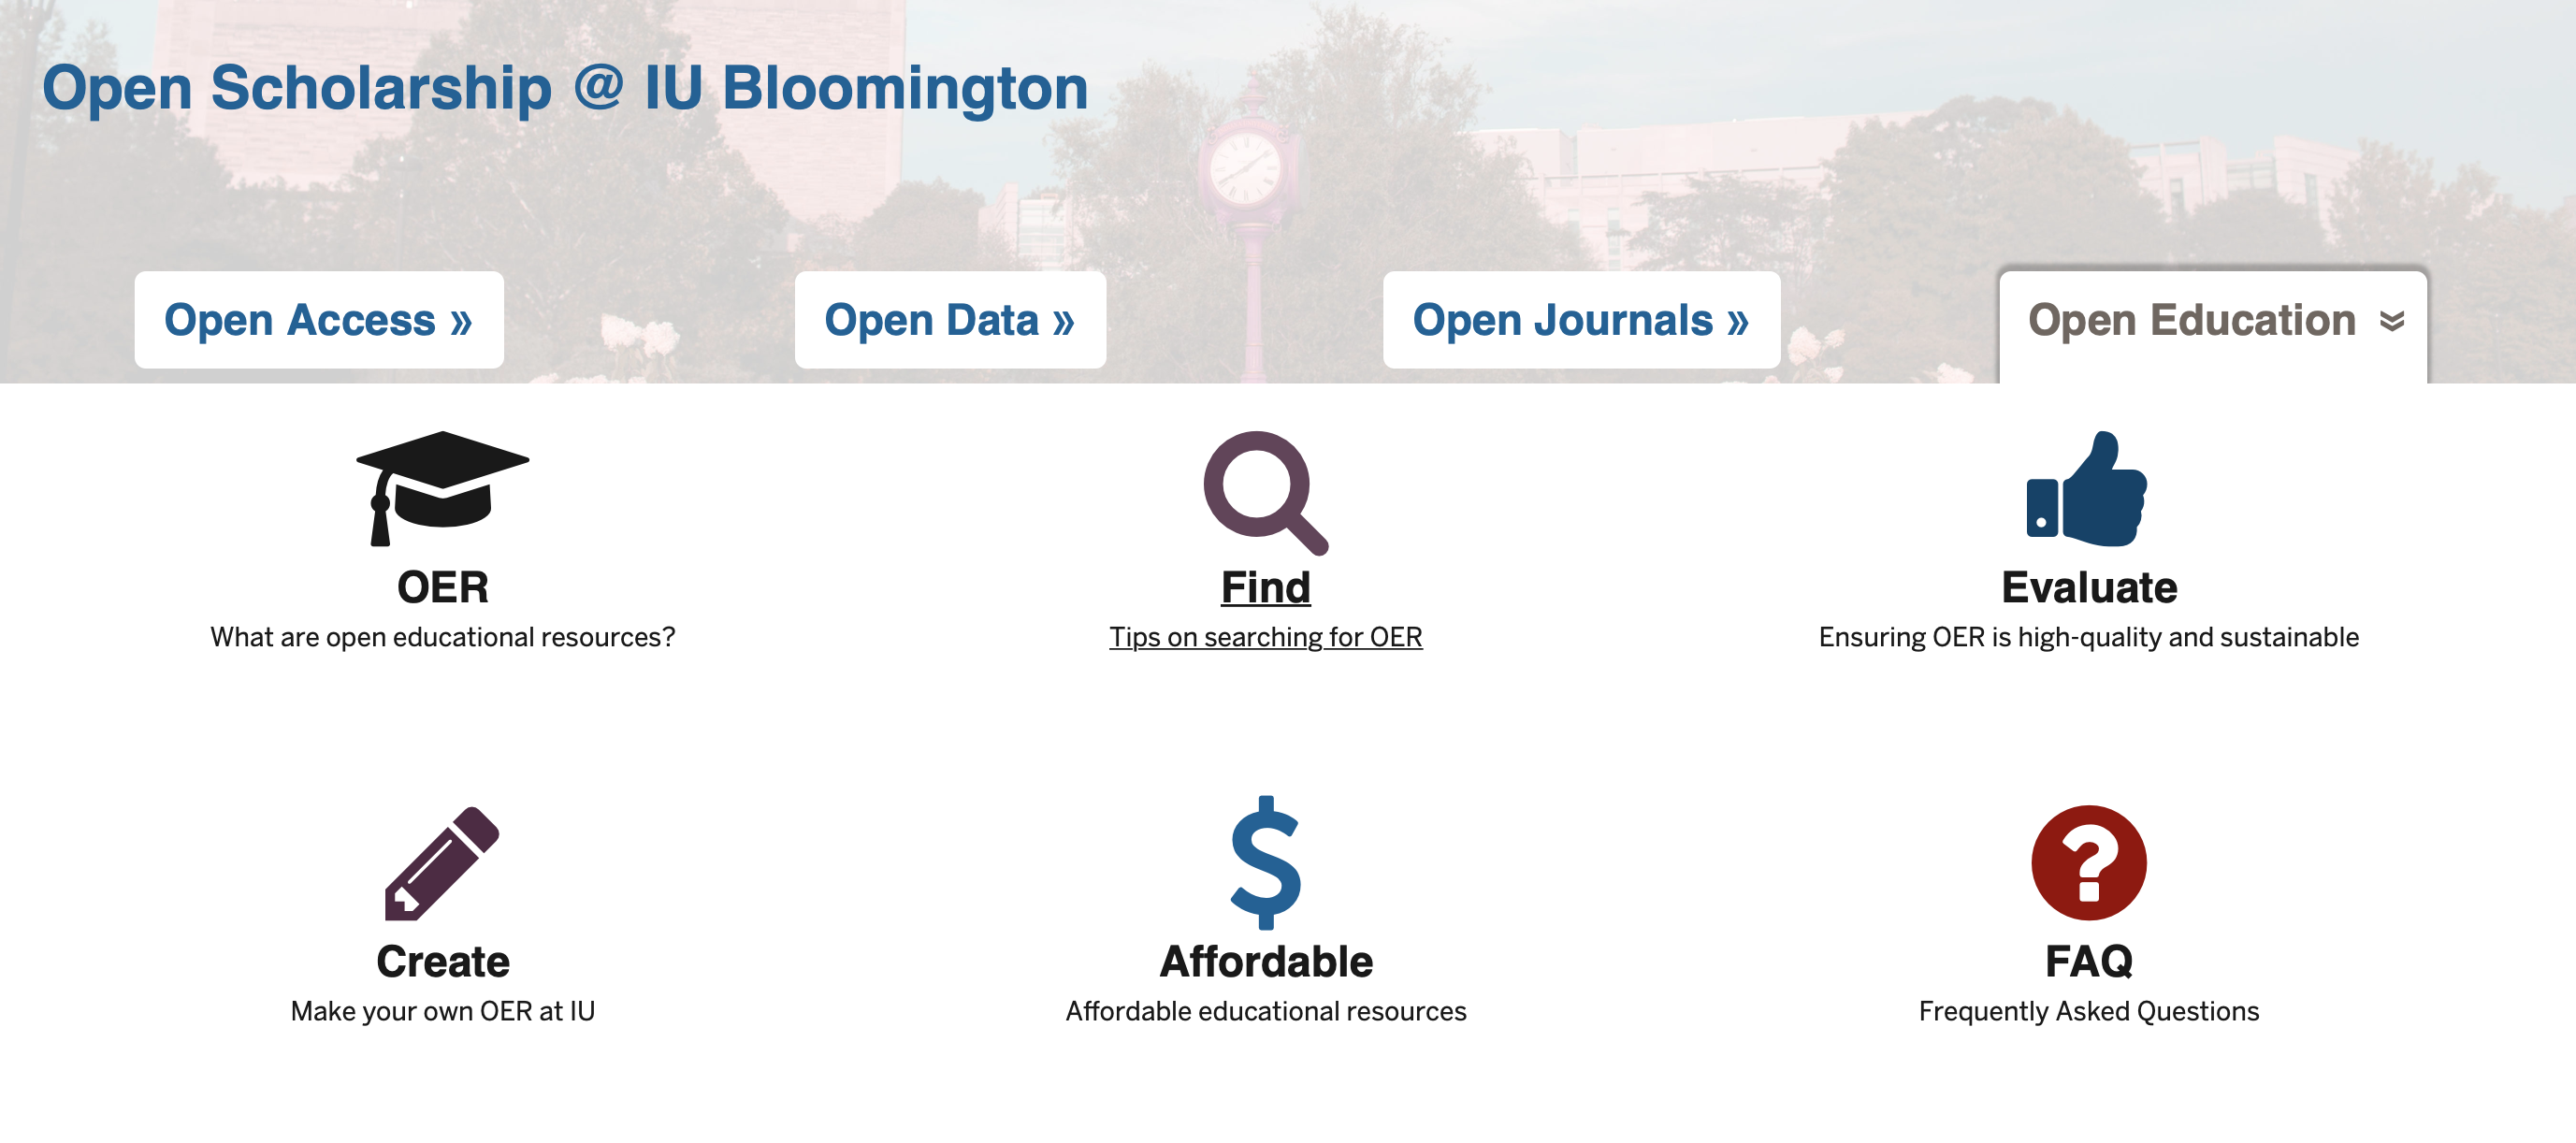 Screenshot of Open Education tab on Open Scholarship website